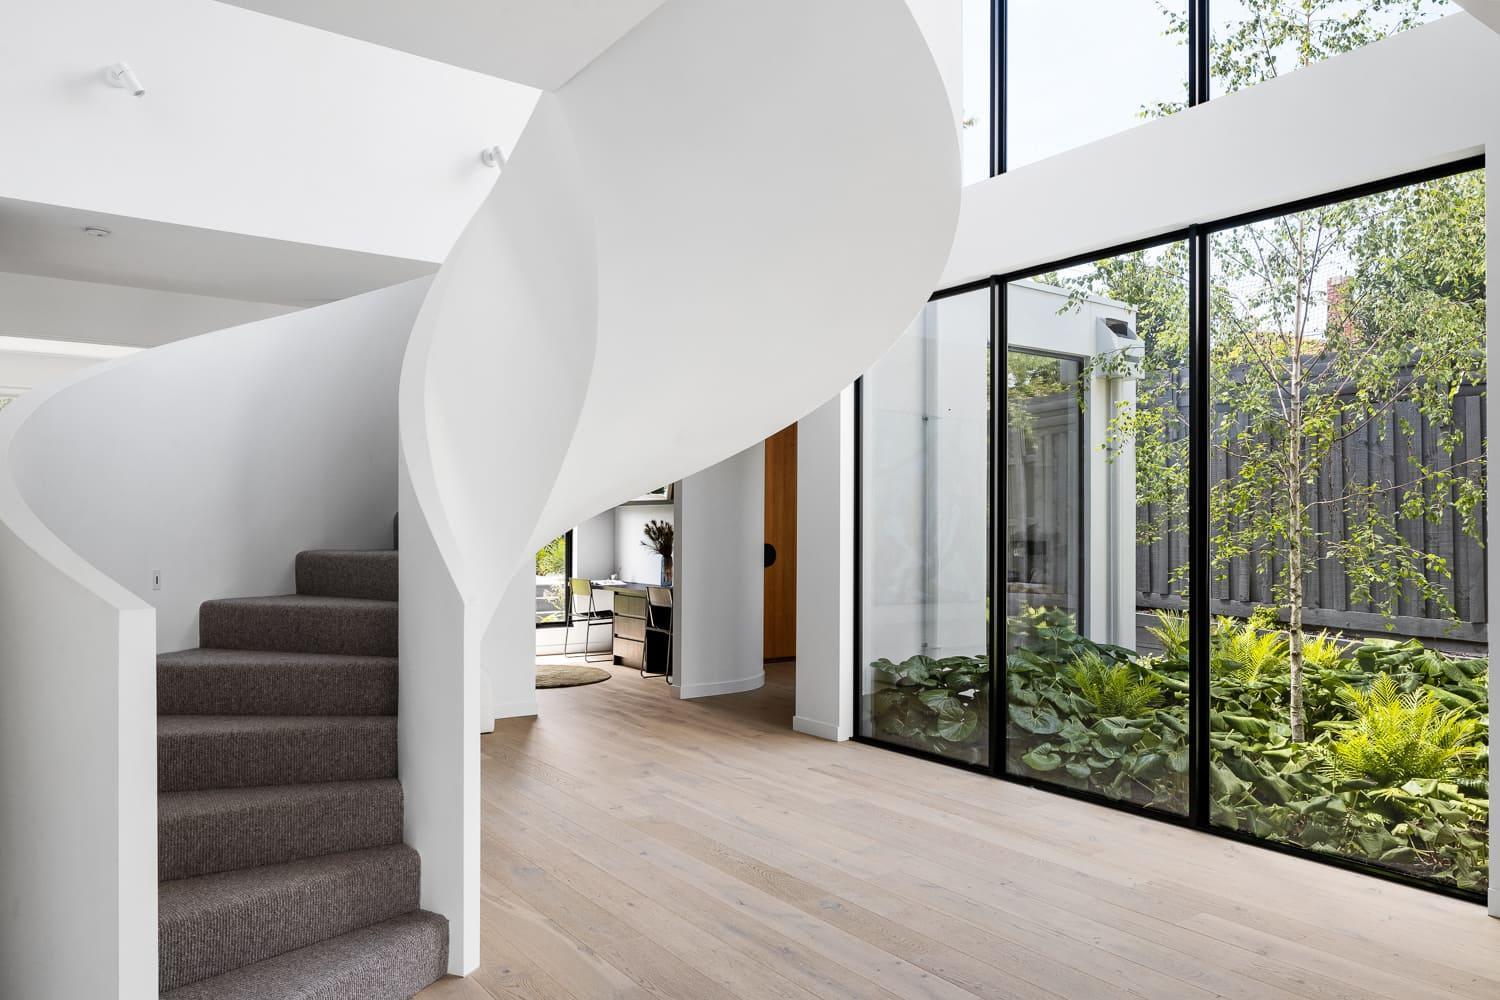 A contemporary house featuring a sculptural, spiral staircase